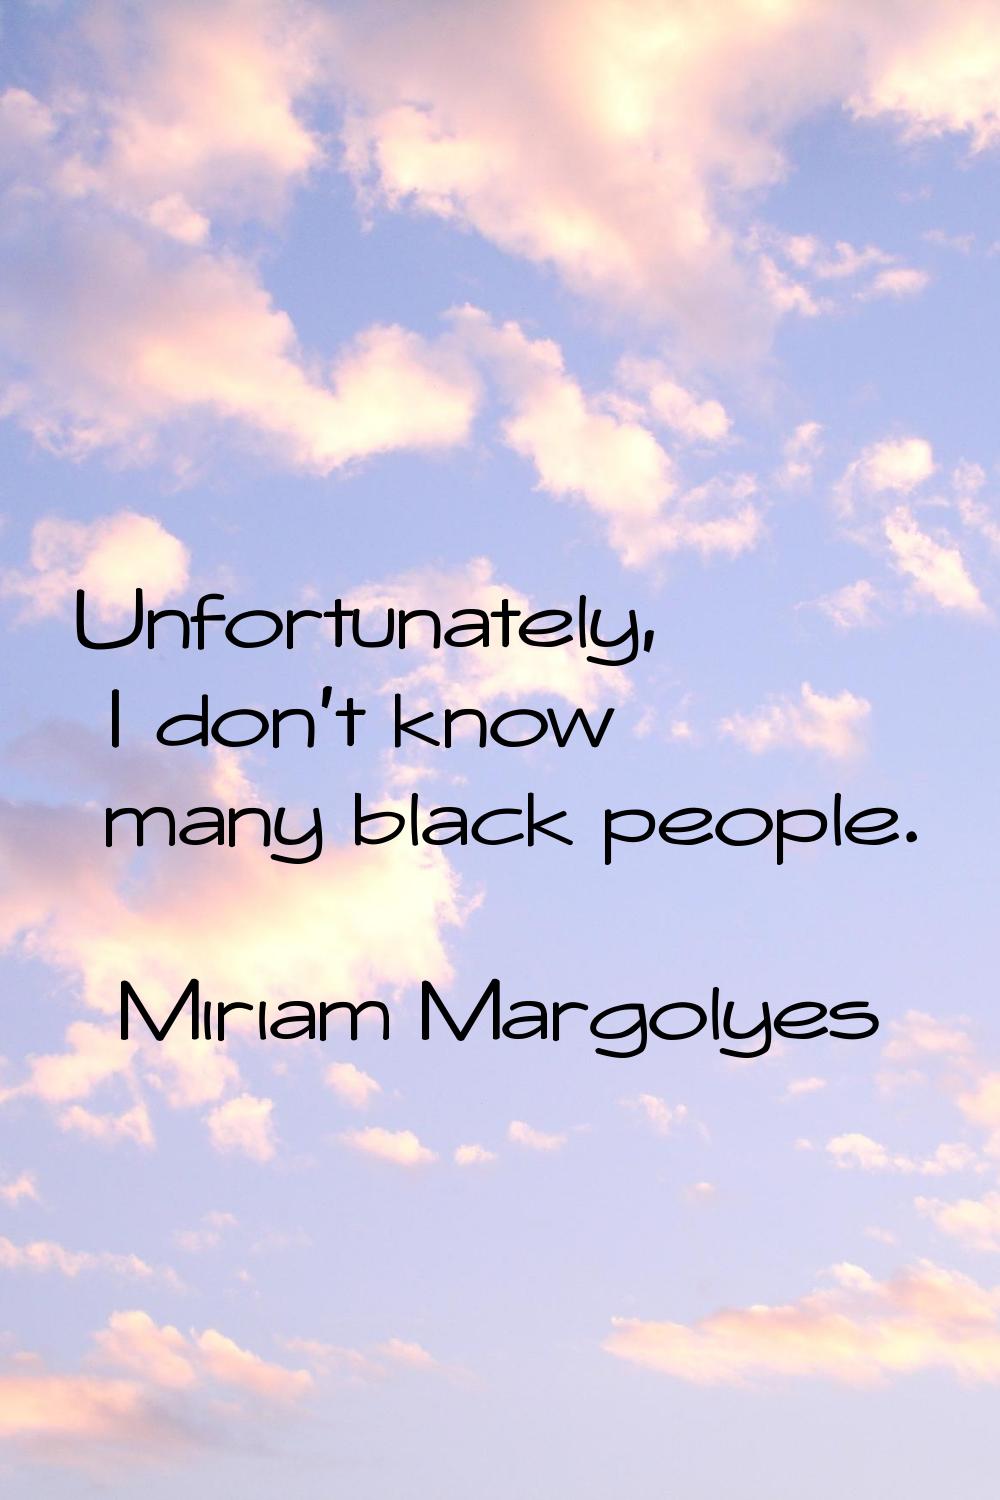 Unfortunately, I don't know many black people.